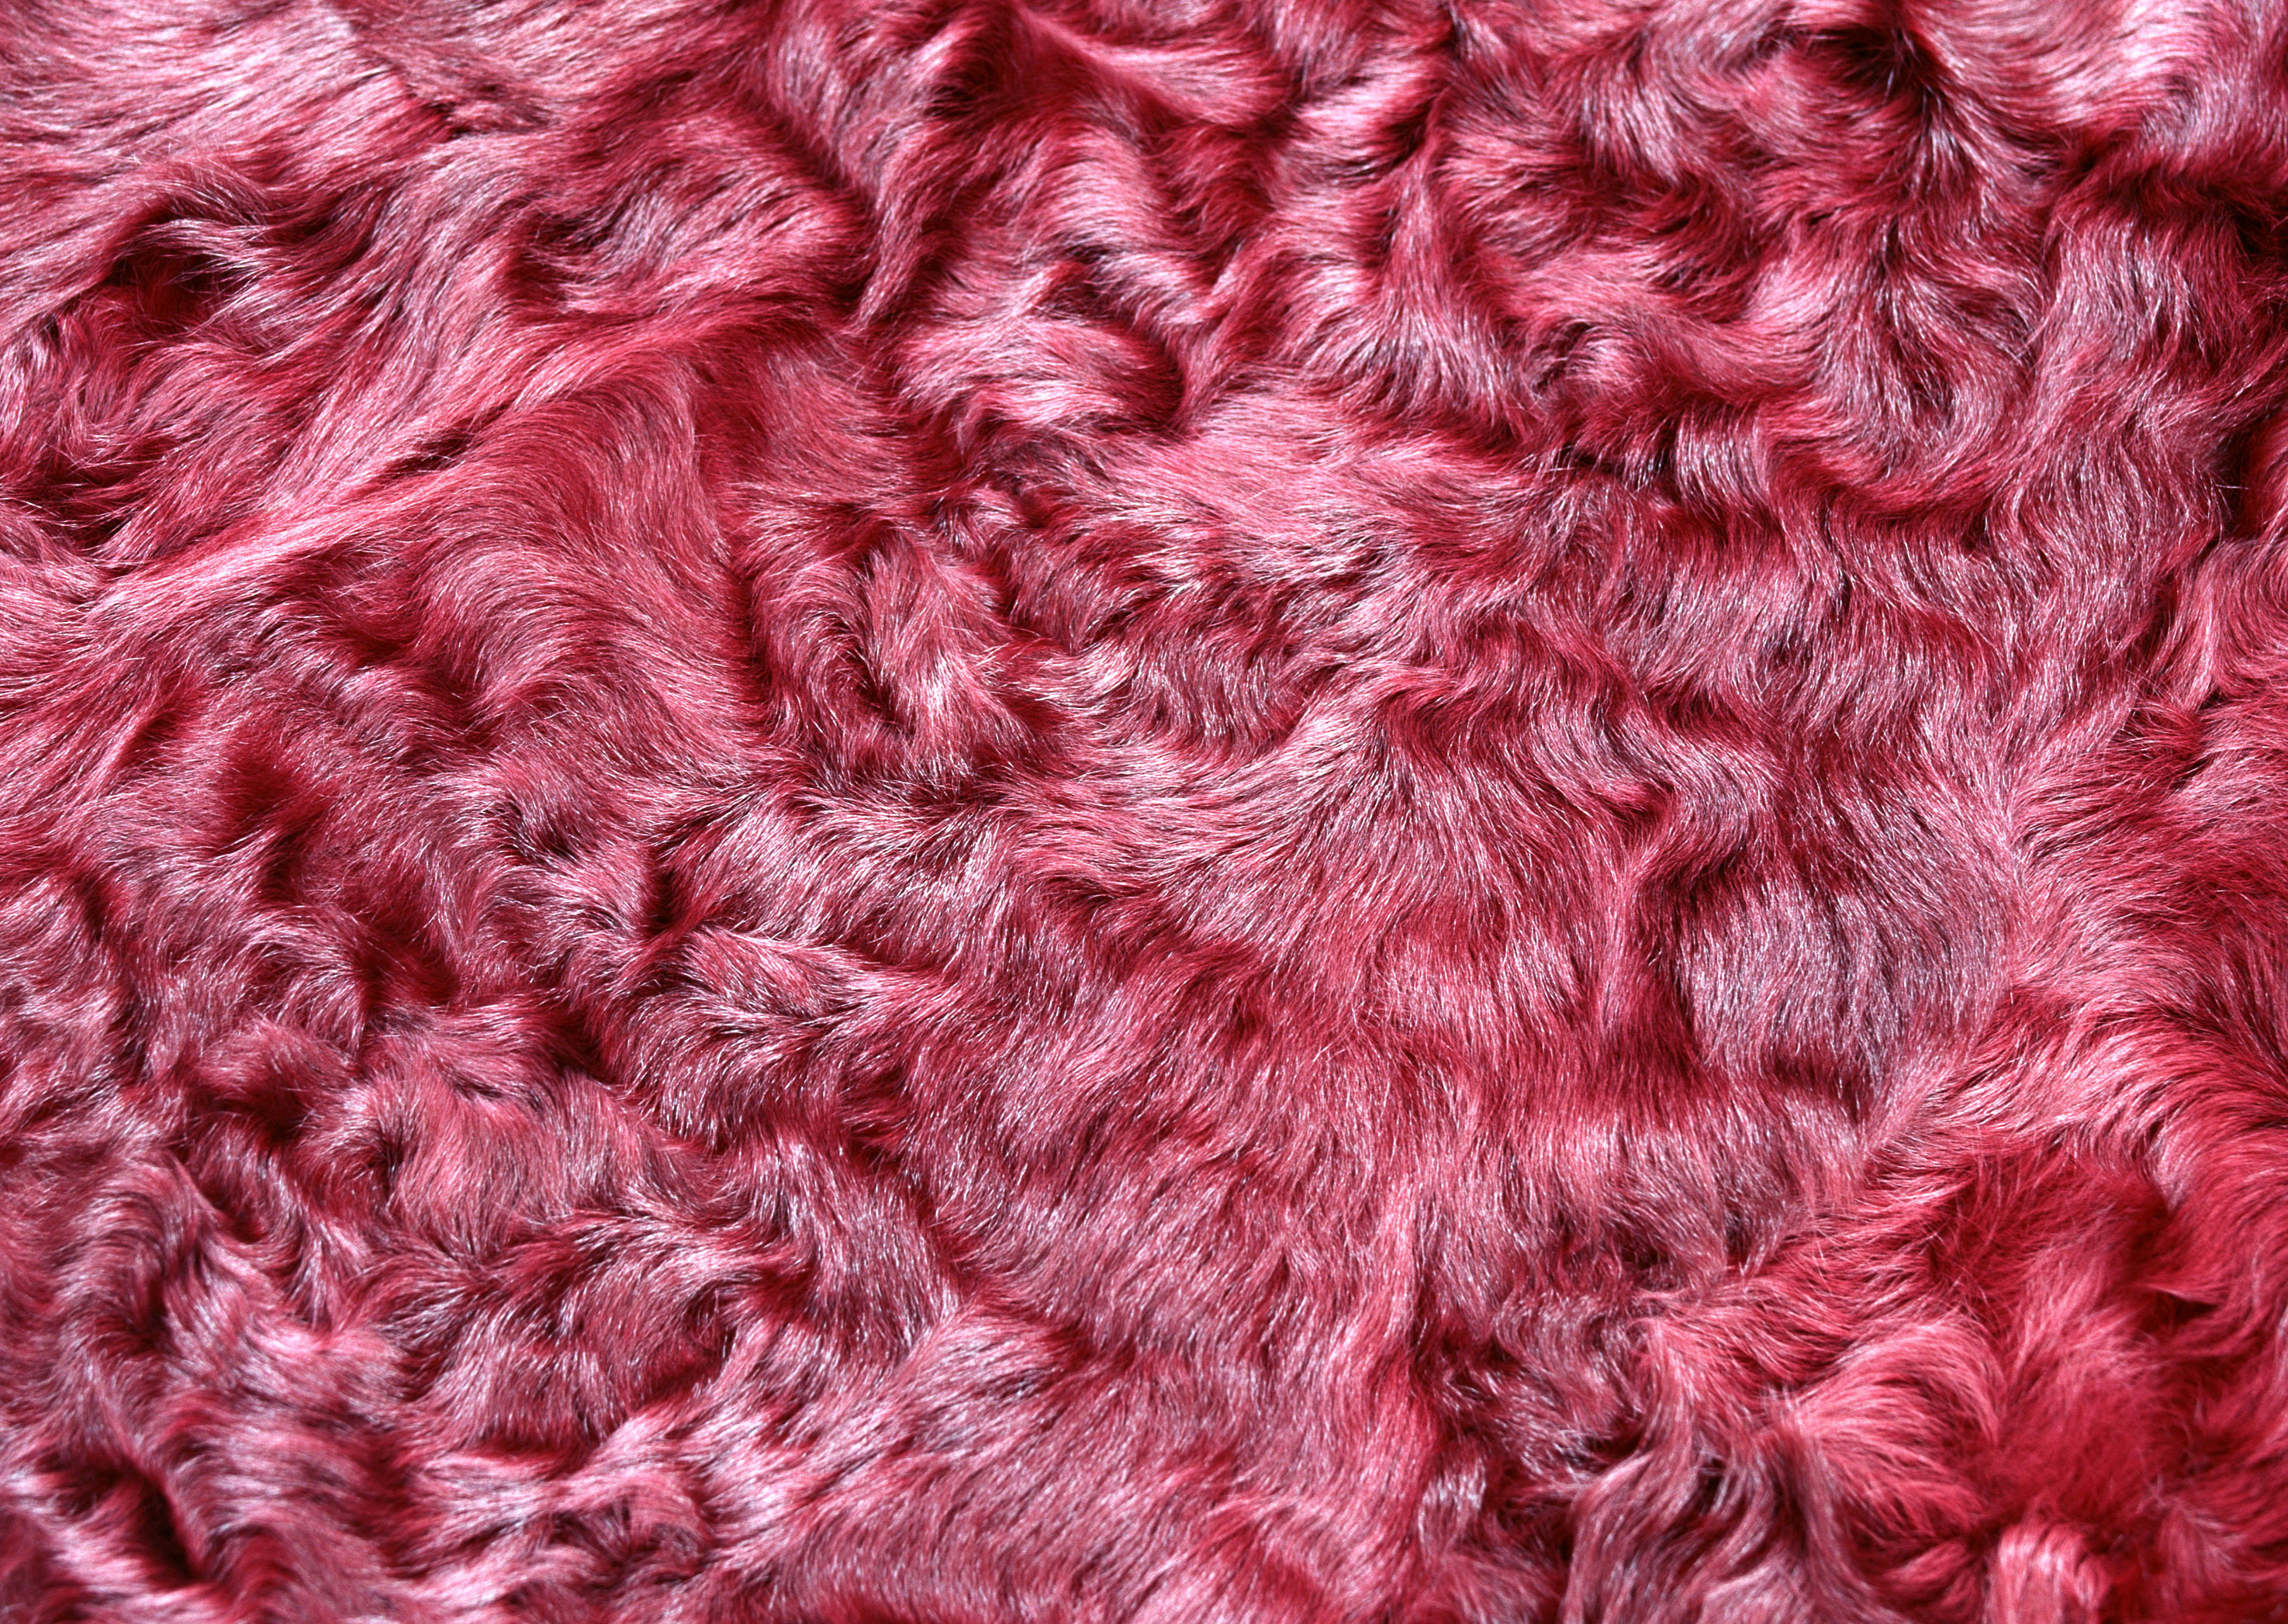 Pink fur texture background image